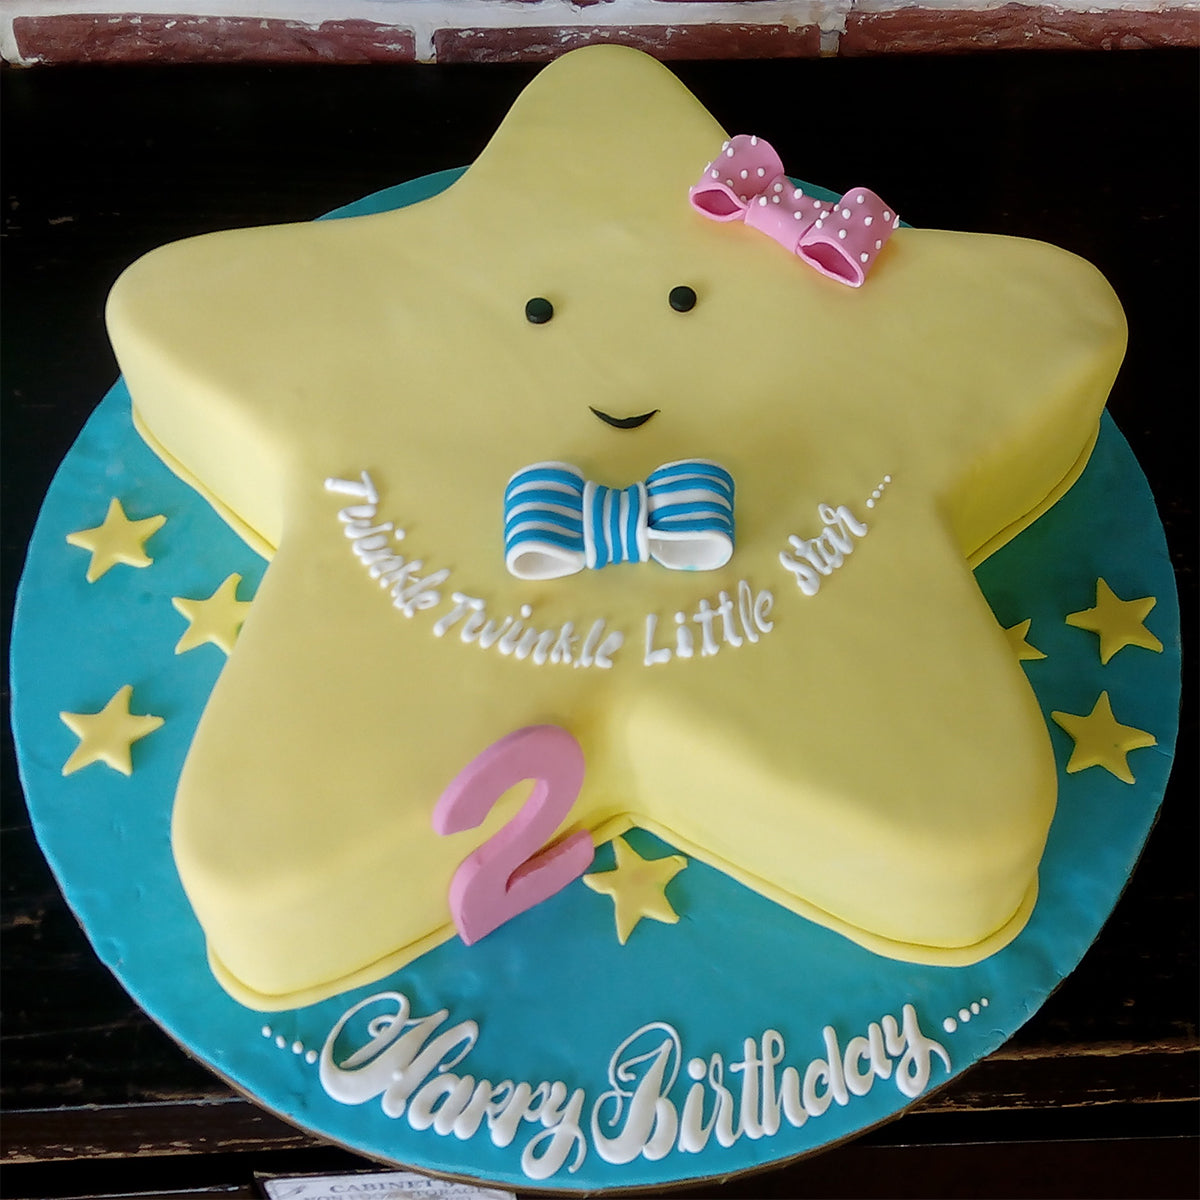 Premium Photo | Decor on the birthday cake with gold stars